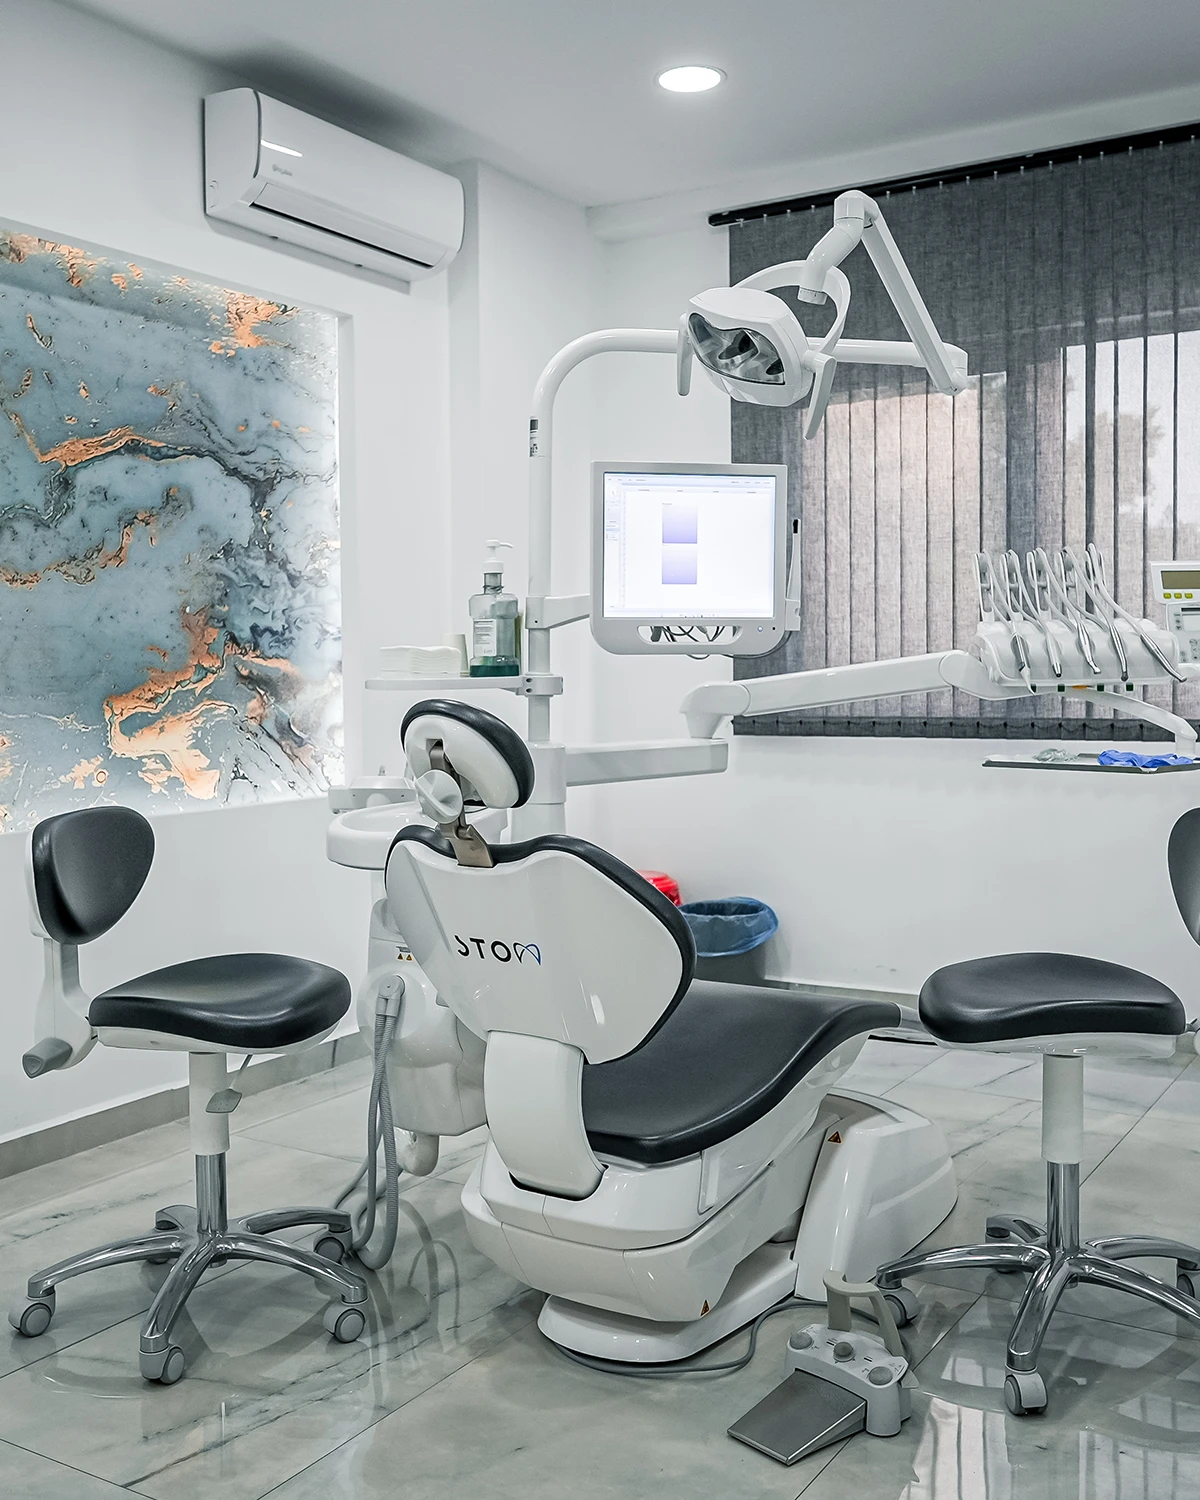 stom-dental-centre-klinigimiz-02